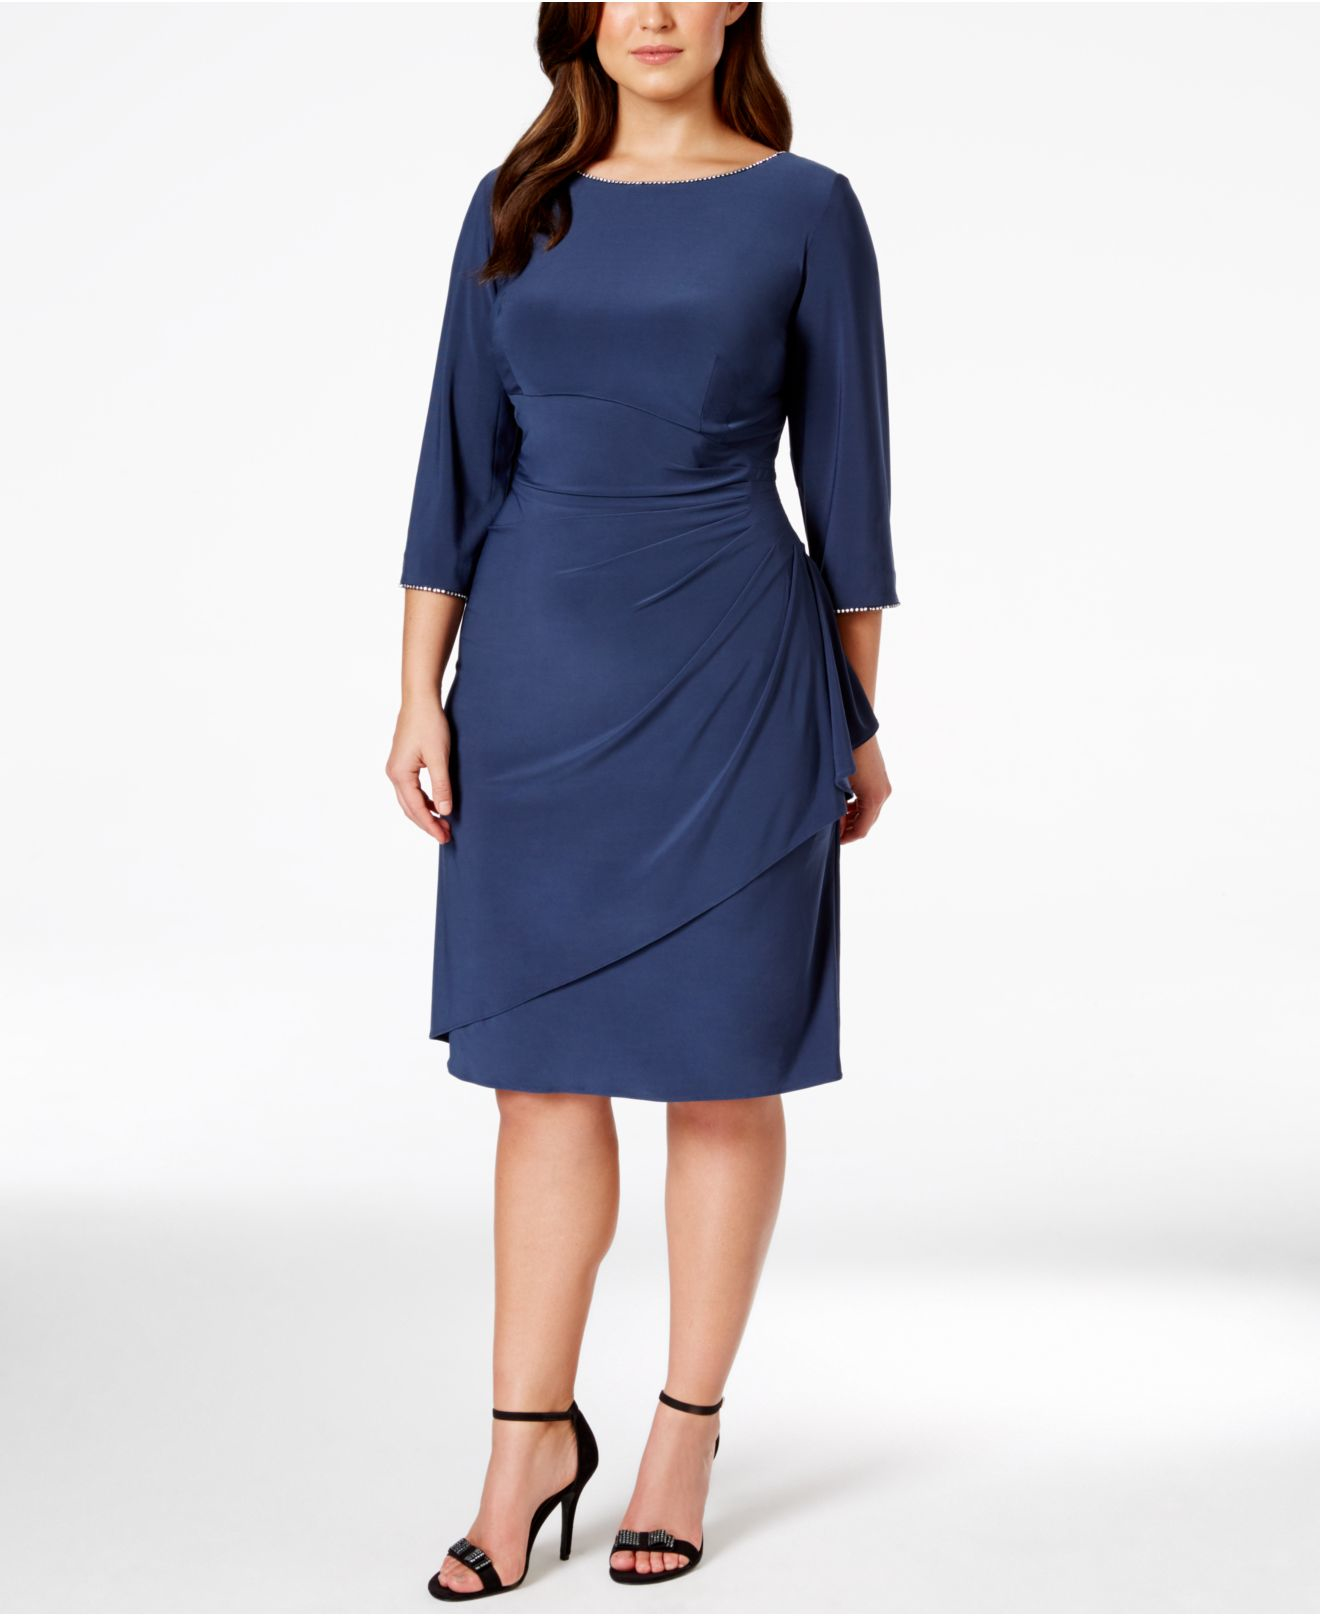 Lyst - Alex Evenings Plus Size Embellished Draped Sheath Dress in Blue